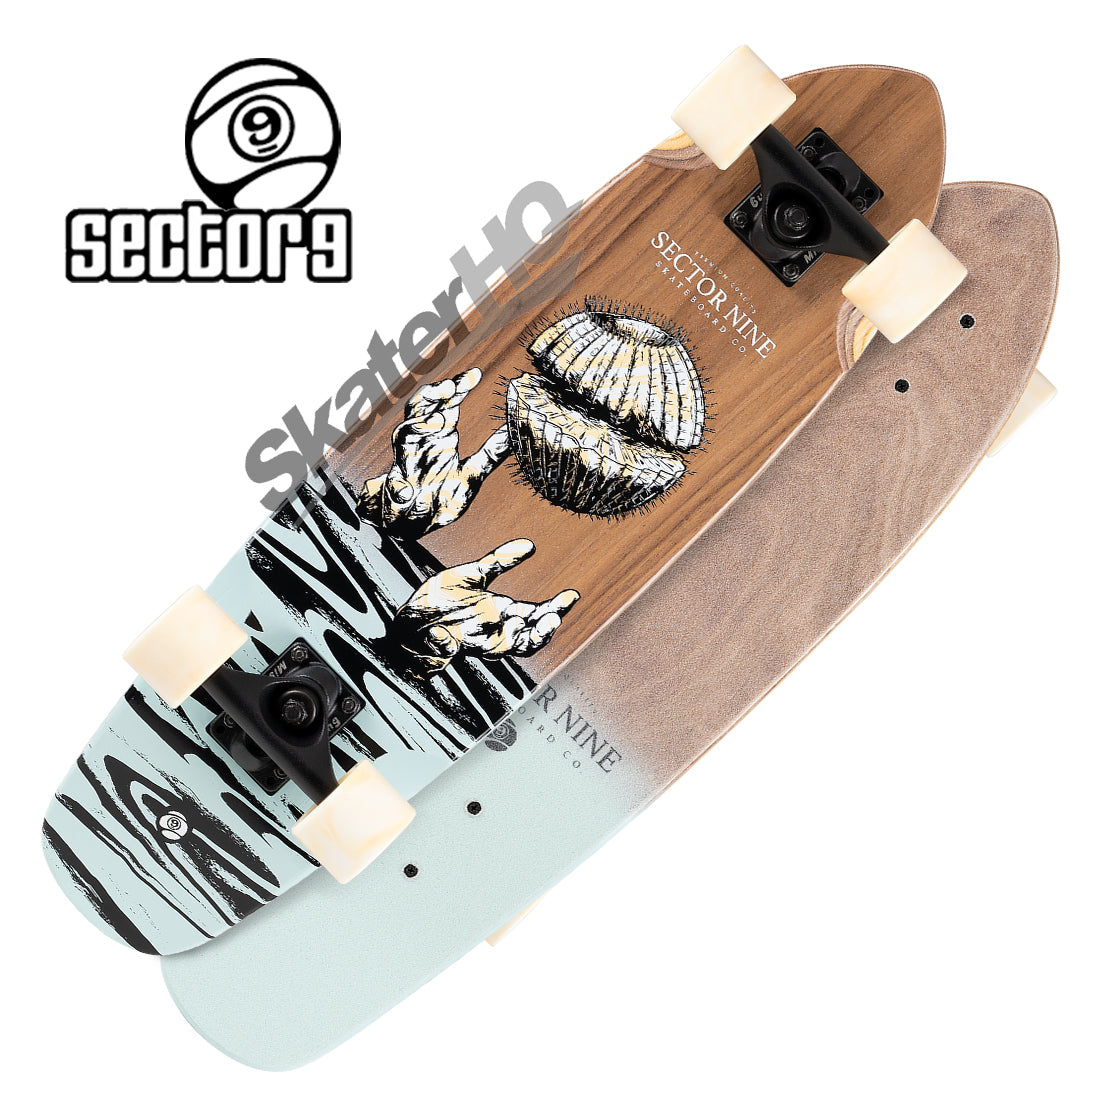 Sector 9 Hopper Handplant 7.5x27.5 Complete - Wood/Teal Skateboard Compl Cruisers